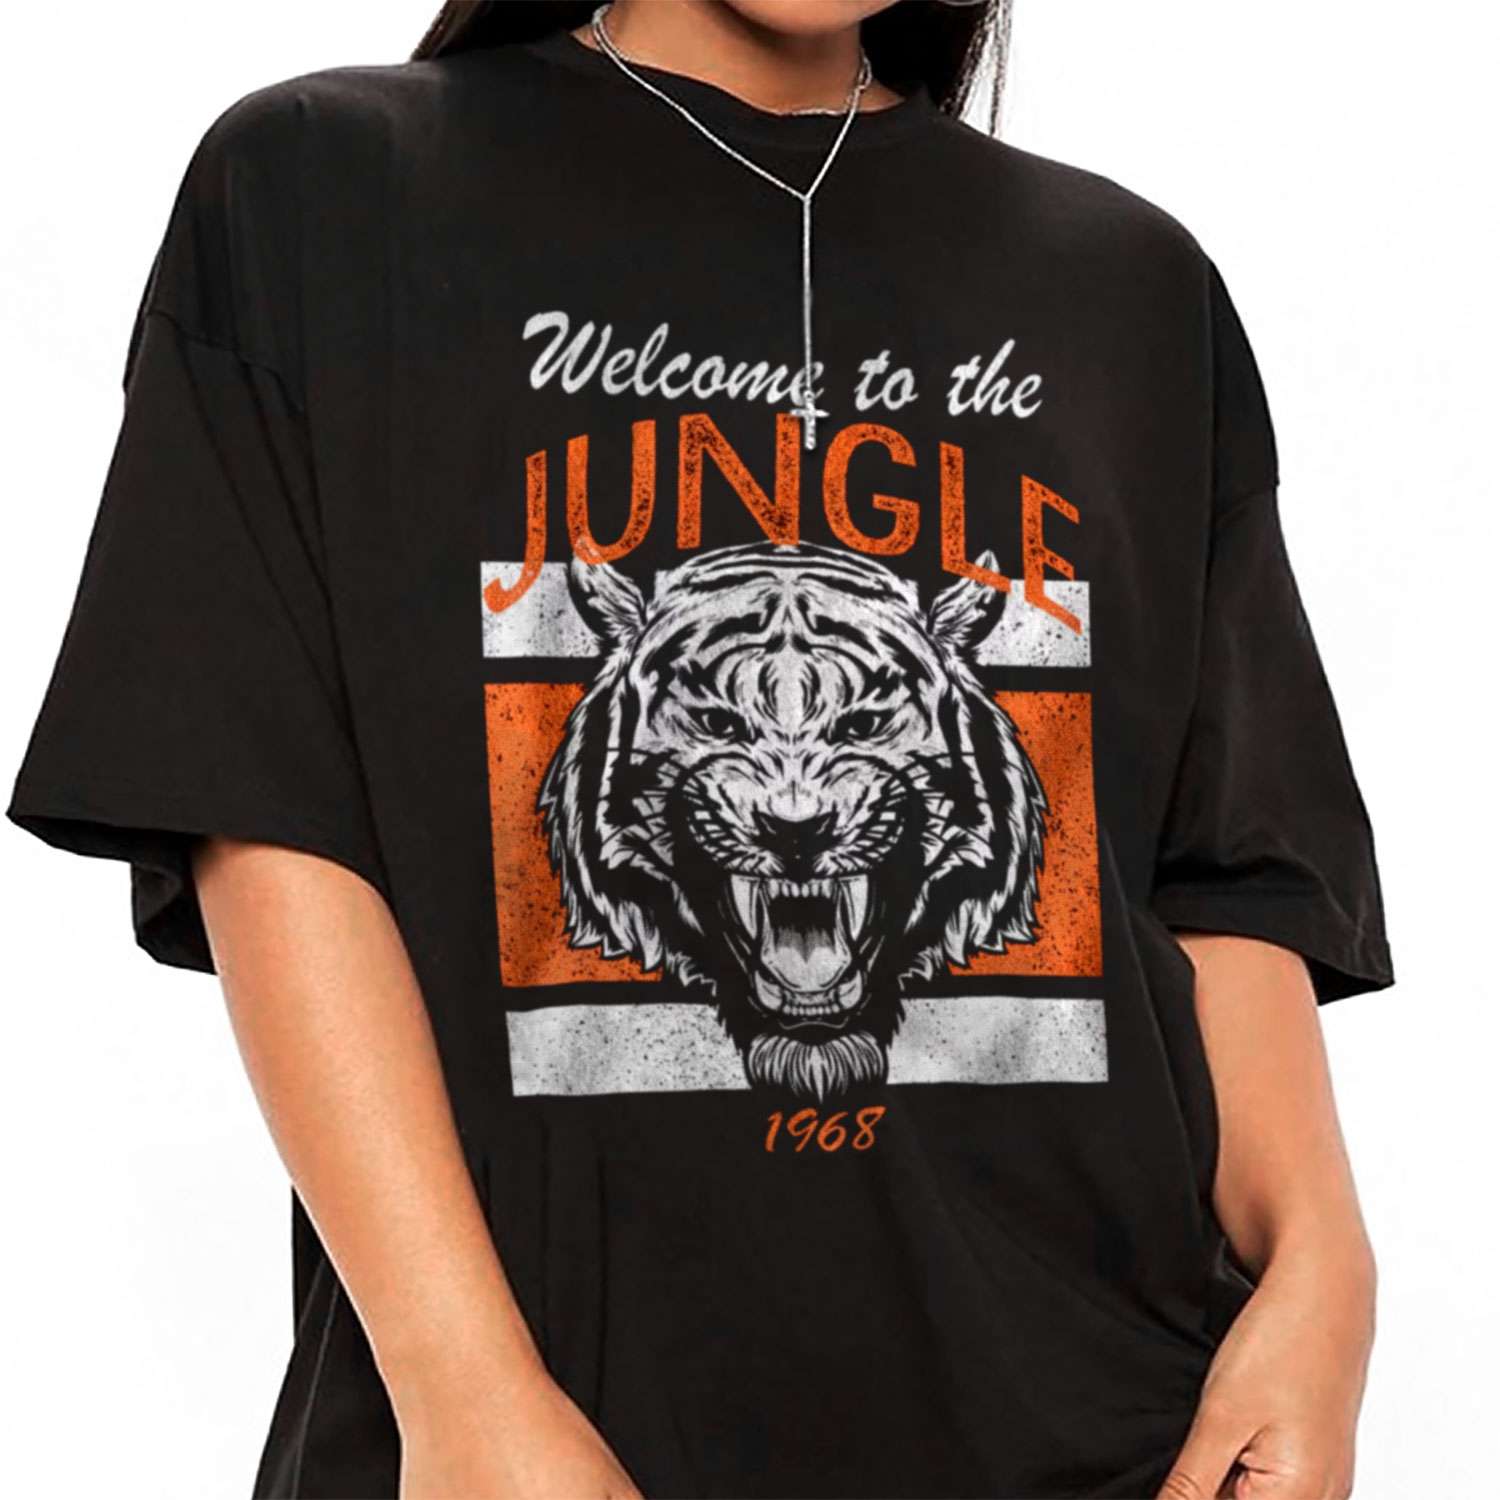 cincinnati bengals welcome to the jungle shirt